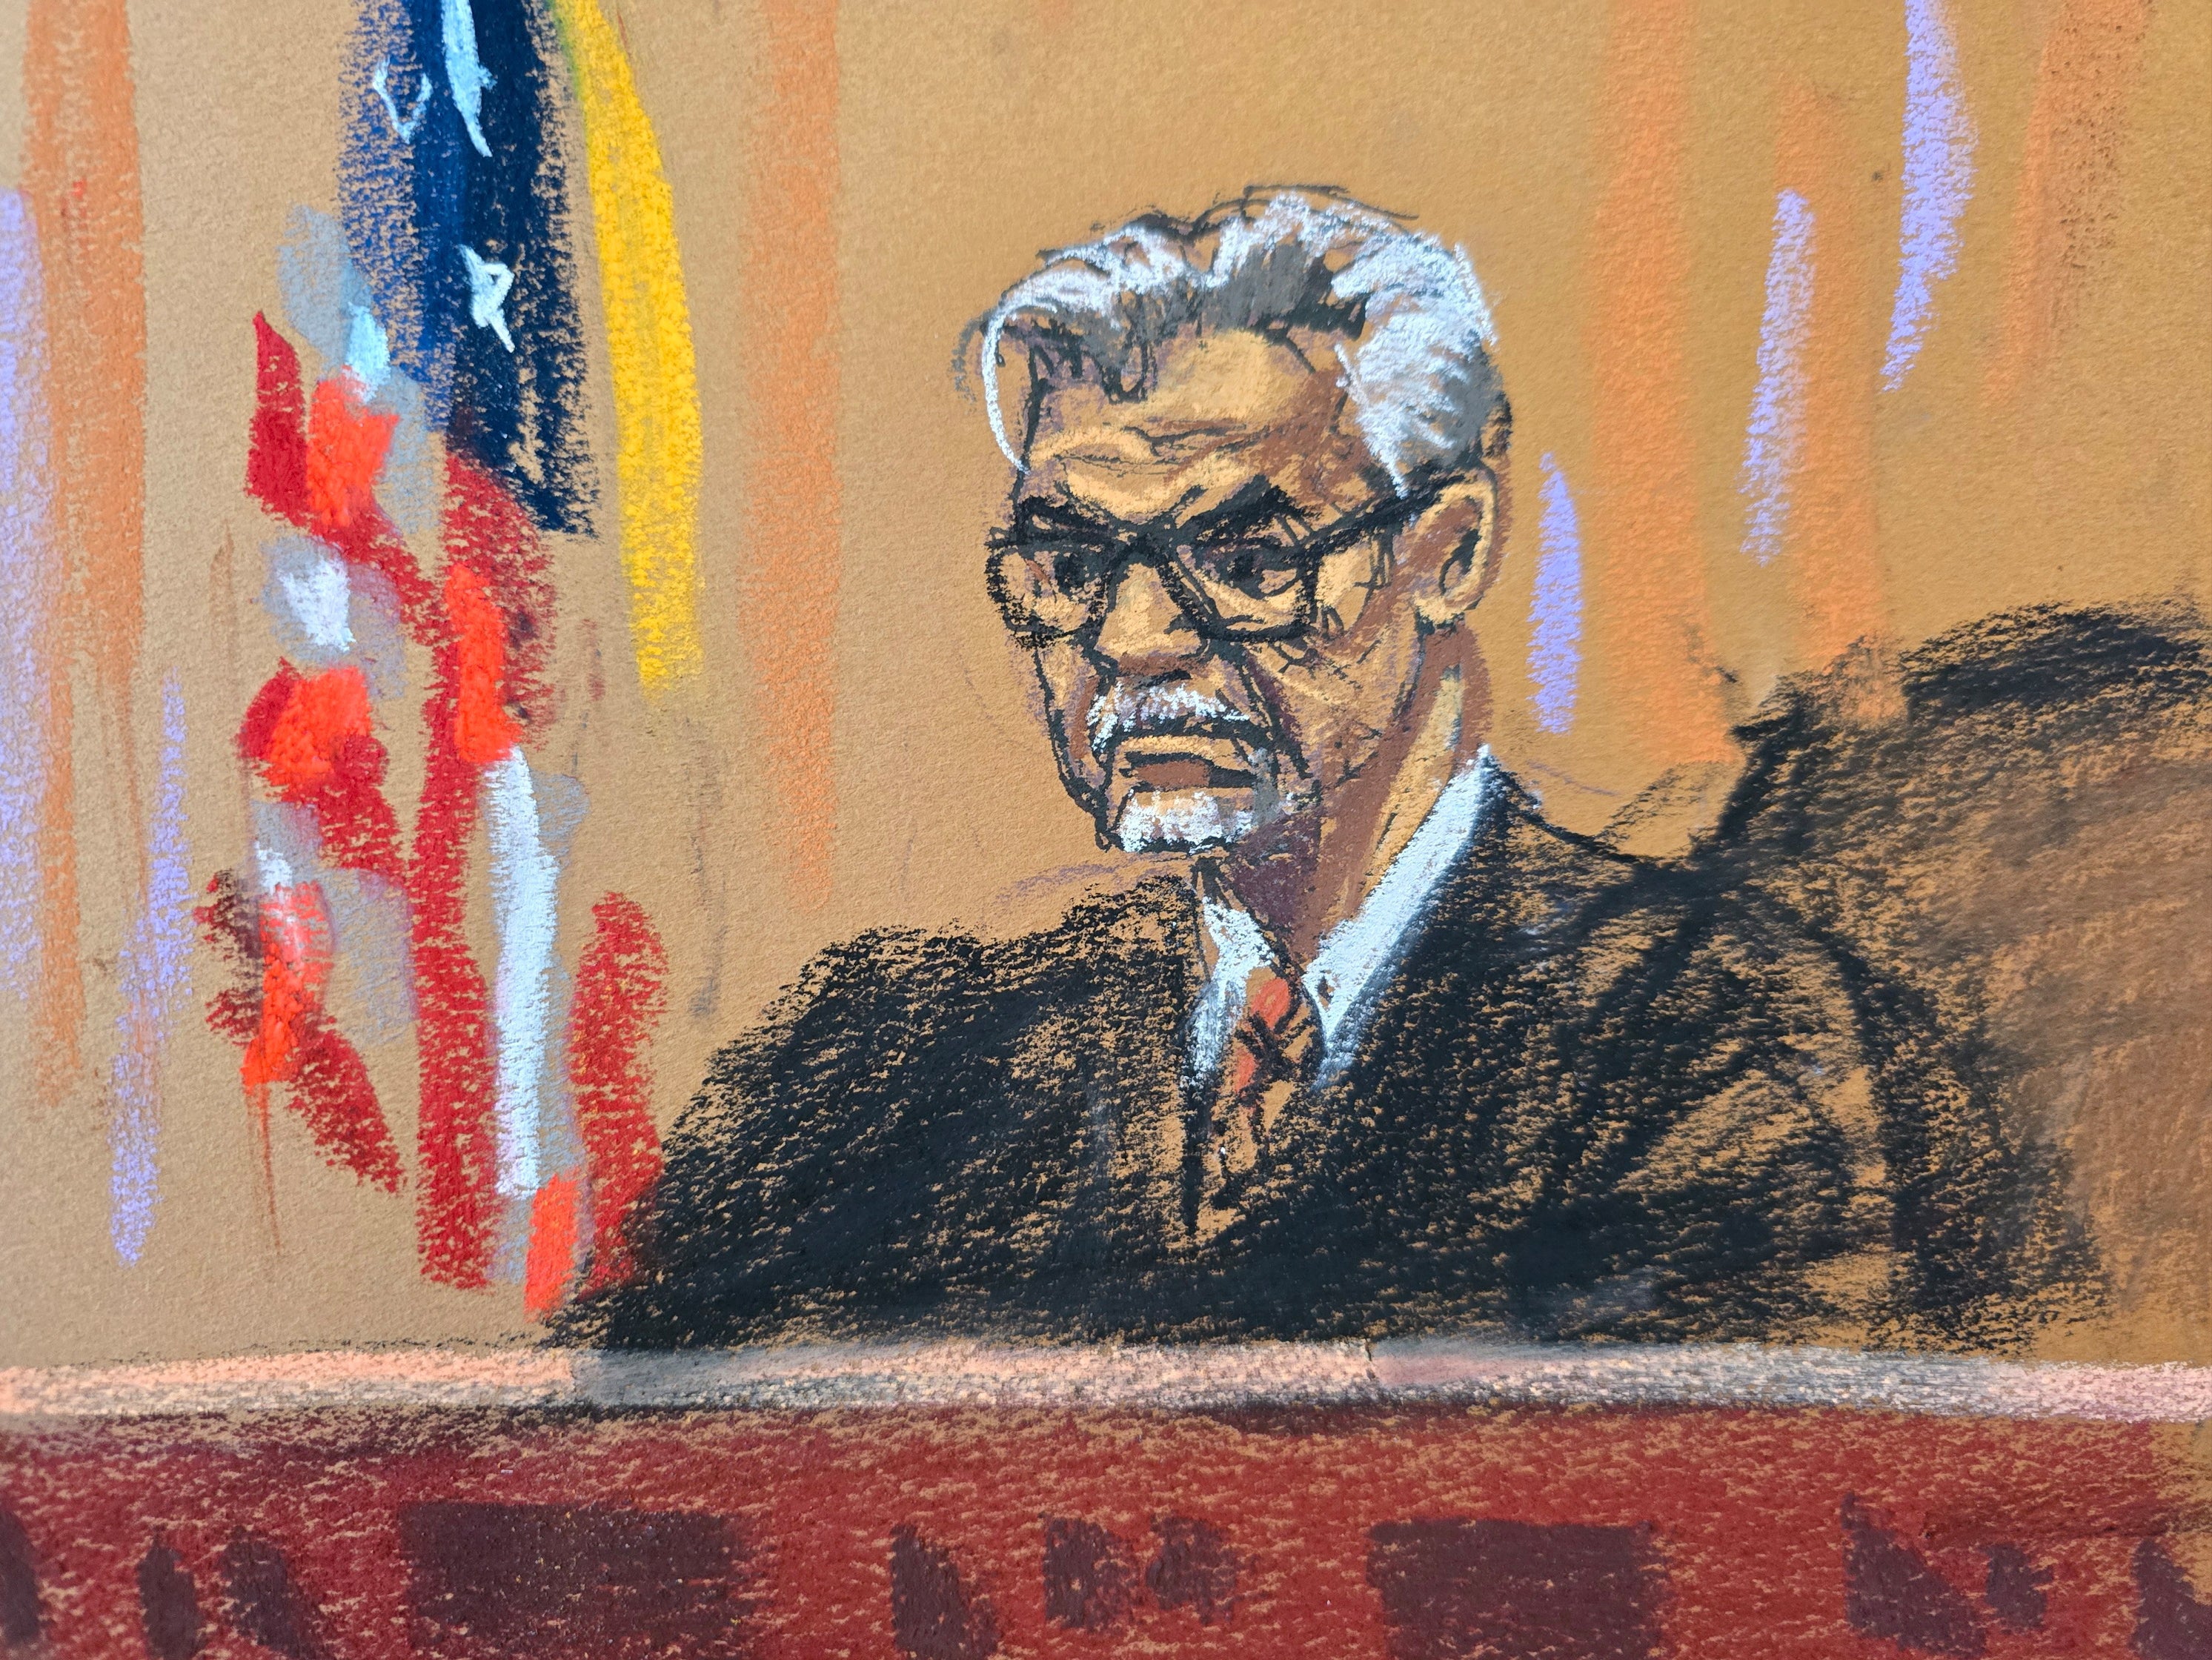 Judge Juan Merchan, shown in a courtroom sketch